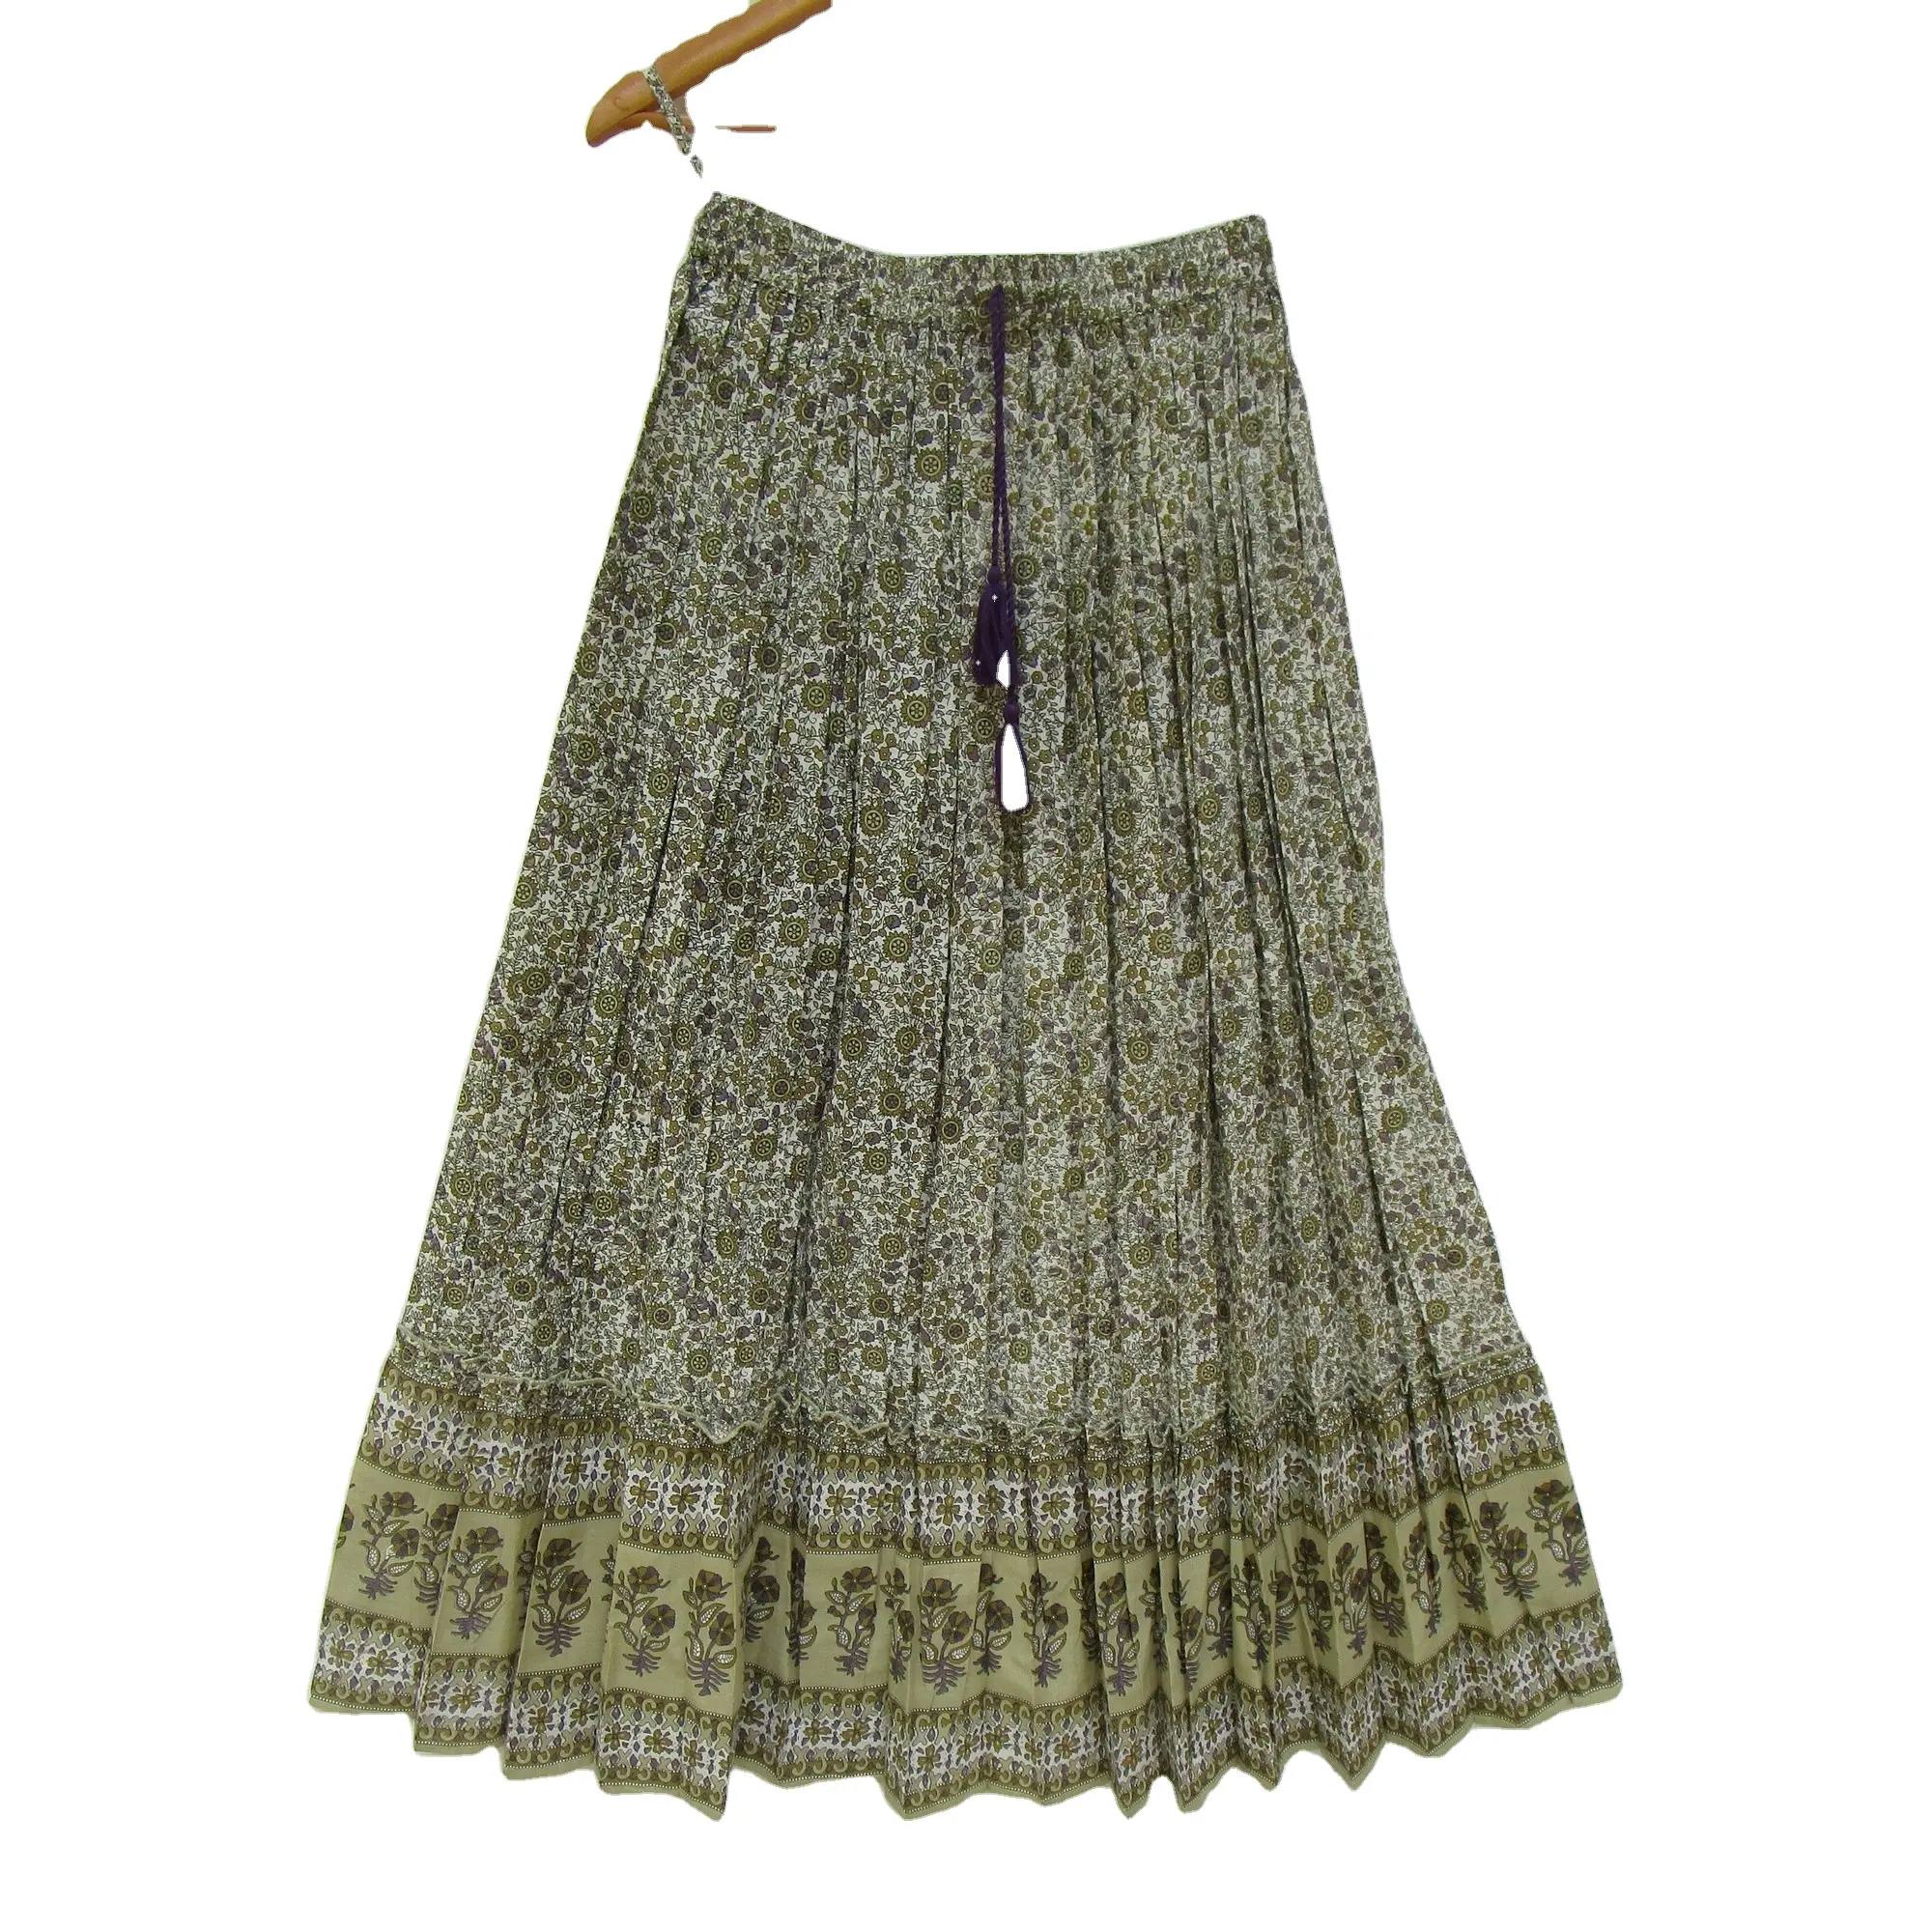 bohemian style cotton floral printed long maxi skirts - summer beach wear long skirts - maxi skirts